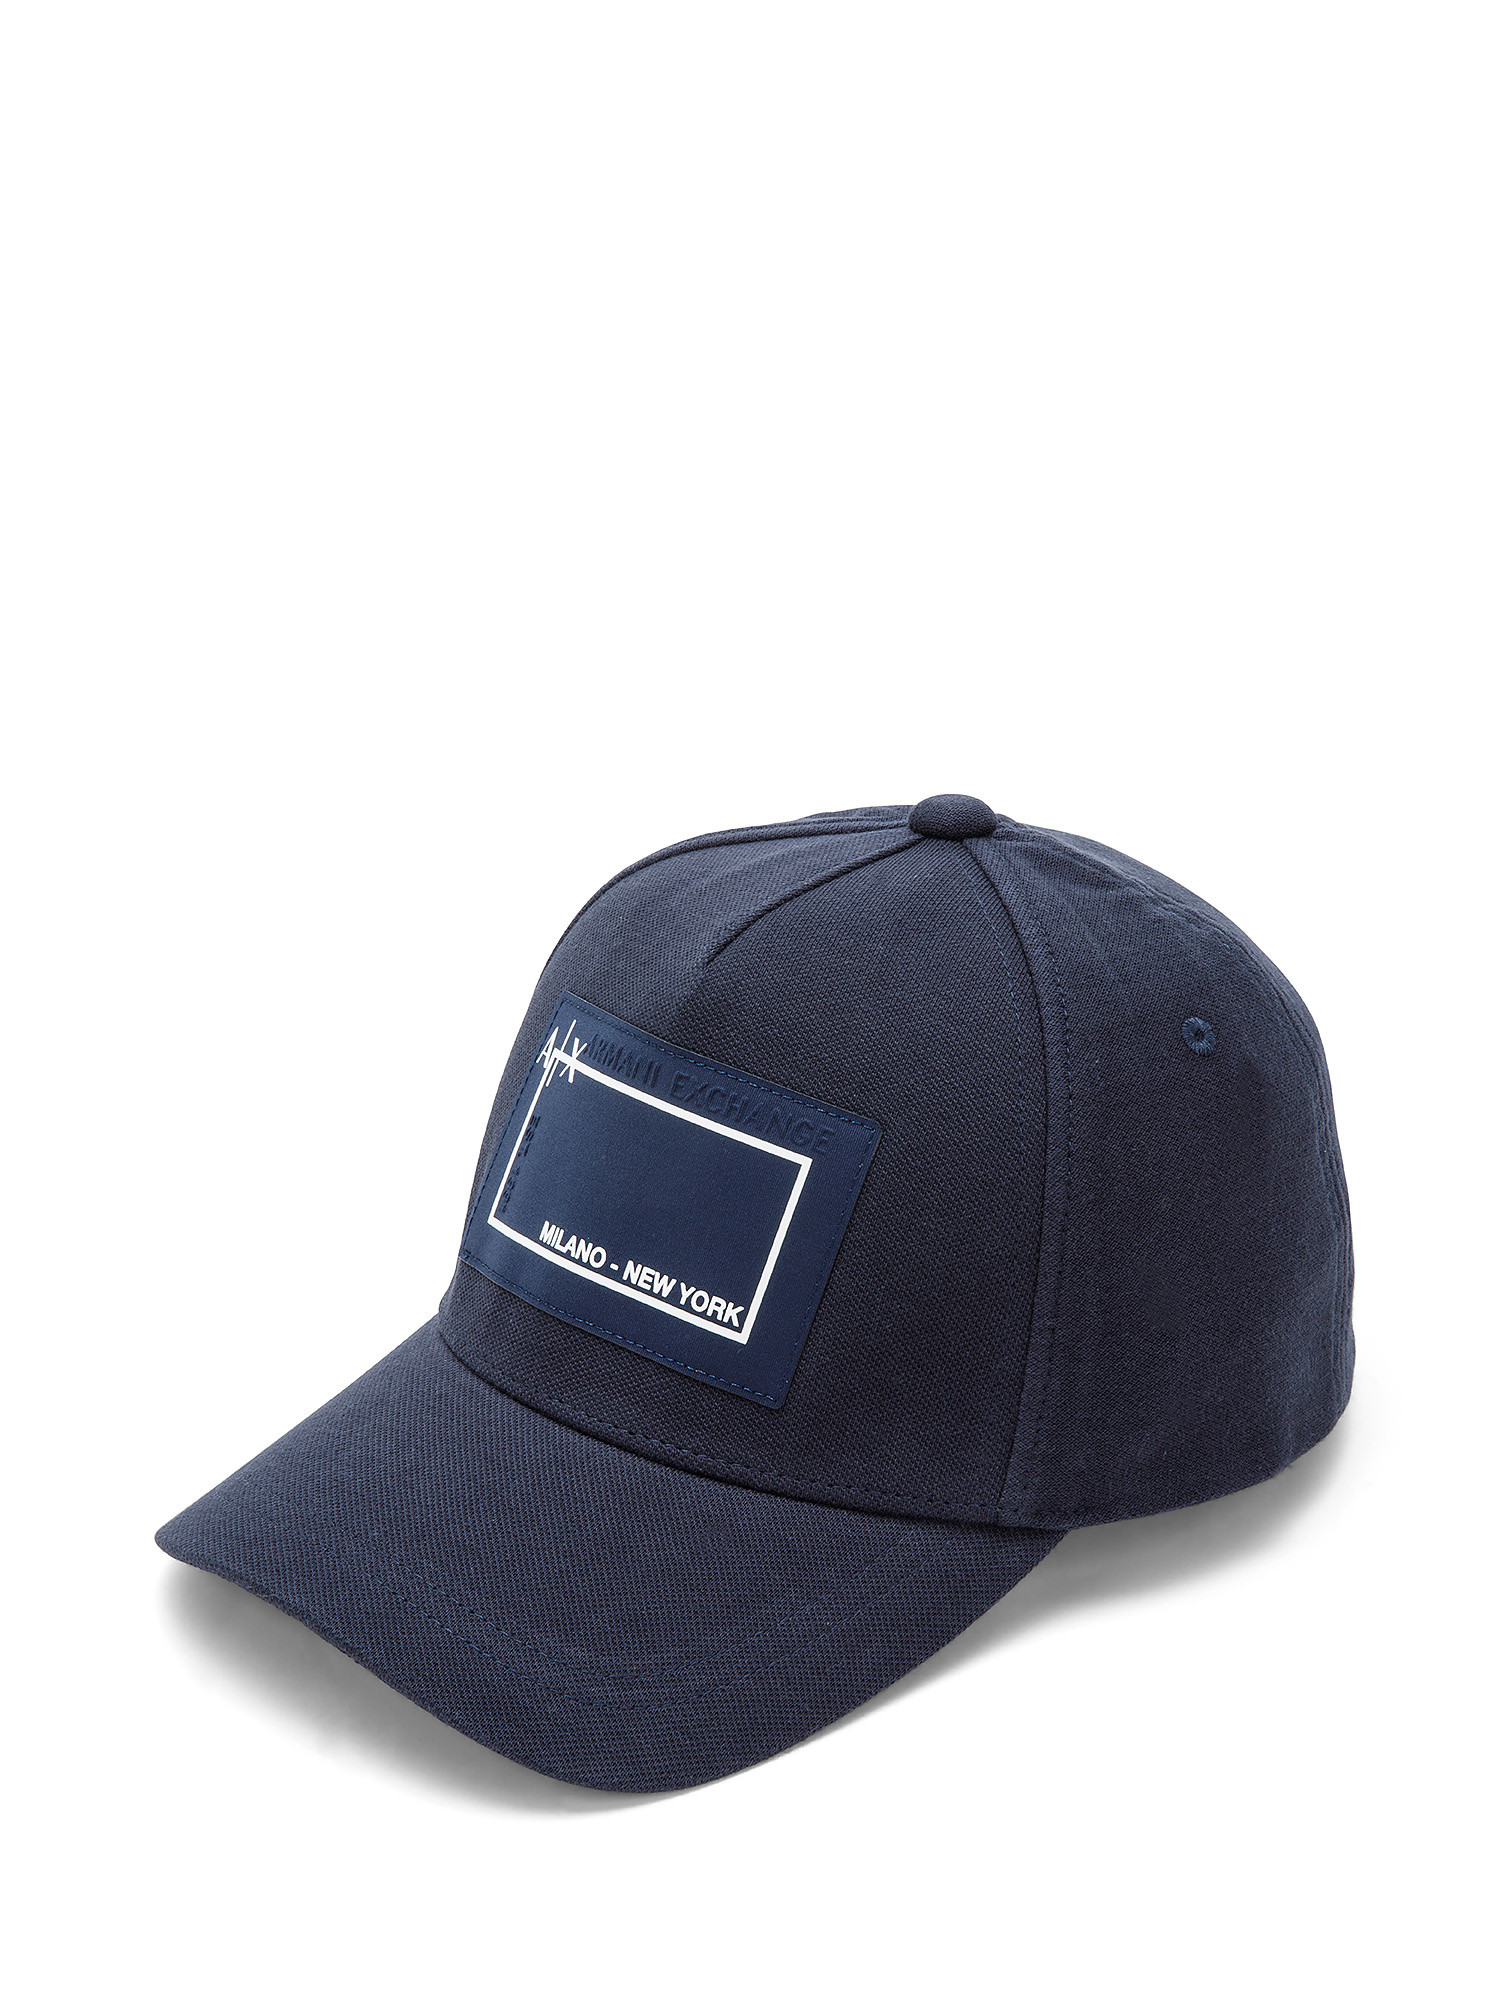 Armani Exchange - Cotton piquà© hat with visor, Dark Blue, large image number 0